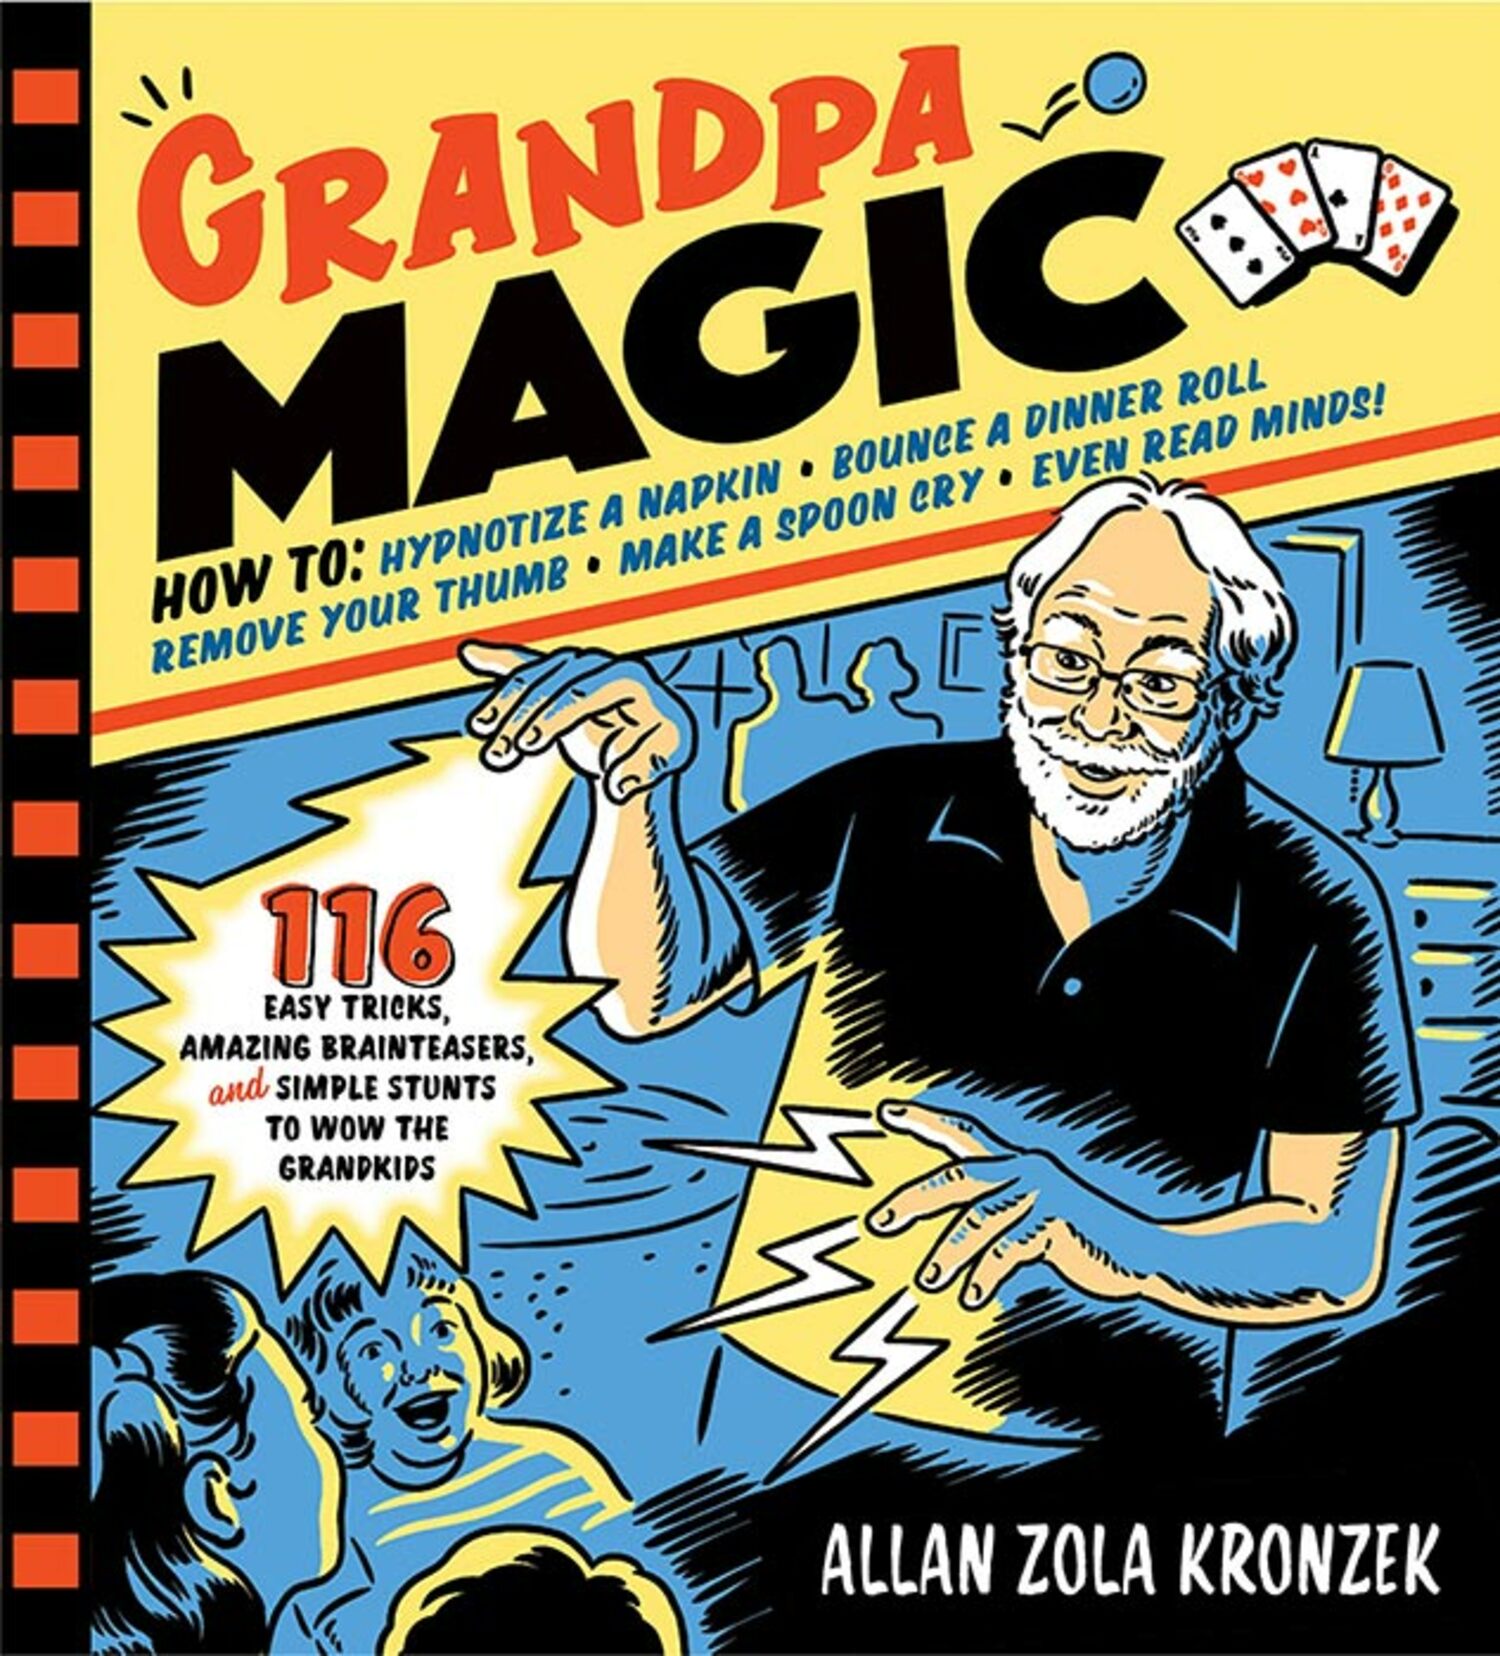 On June 10, Allan Zola Kronzek will demonstrate close-up magic and sign copies of his book “Grandpa Magic” at Kramoris Gallery.